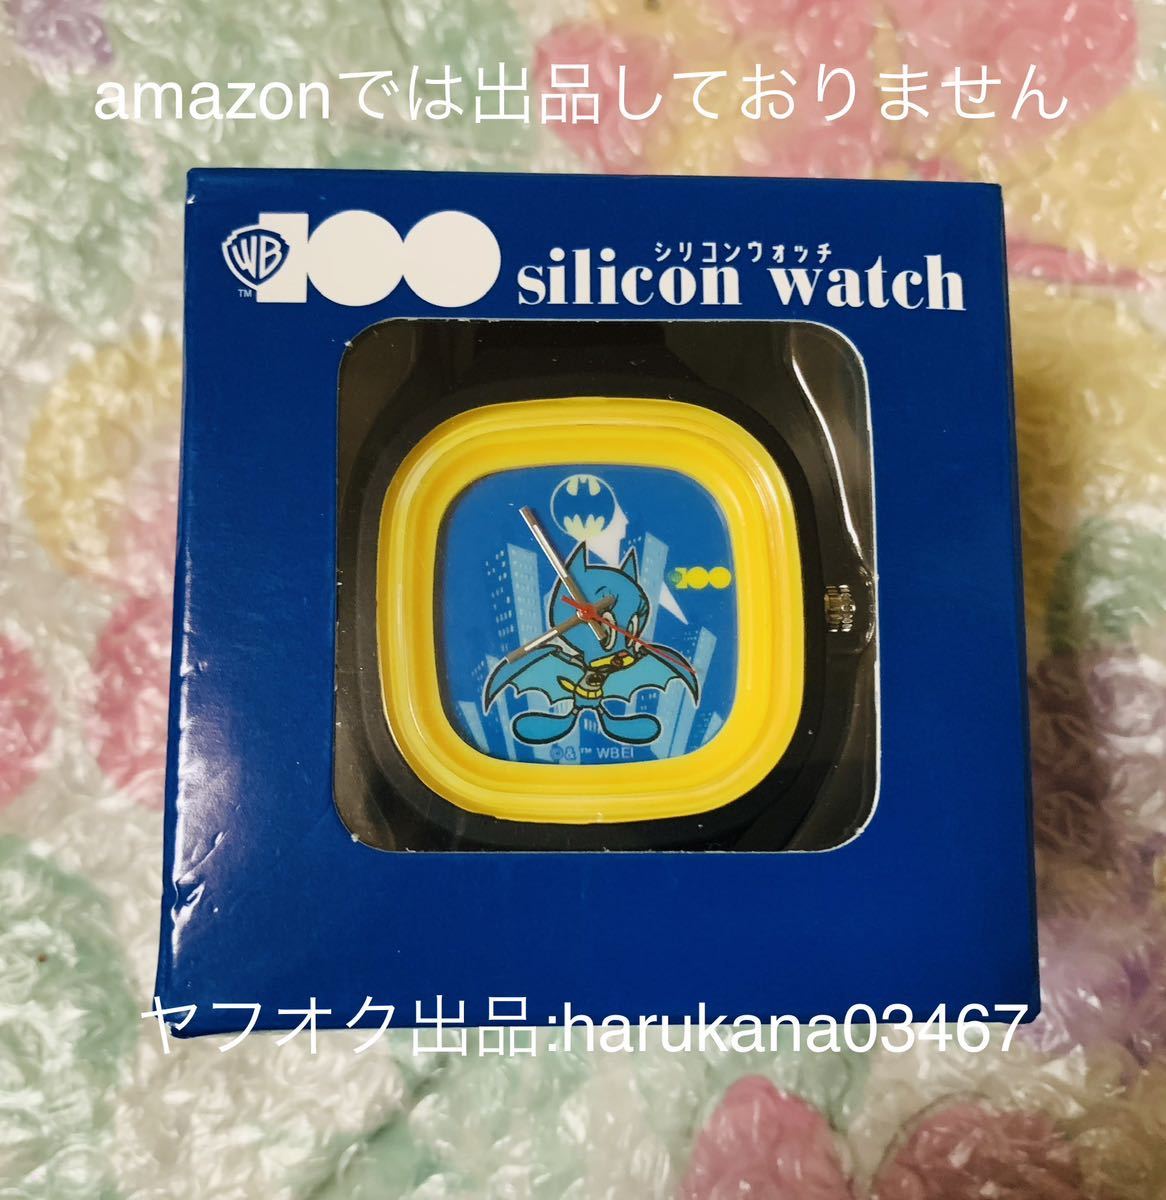  unused not for sale Tweetytui- tea Badmanbado man collaboration silicon watch wristwatch wa-na- Brothers 100 anniversary commemoration gift 